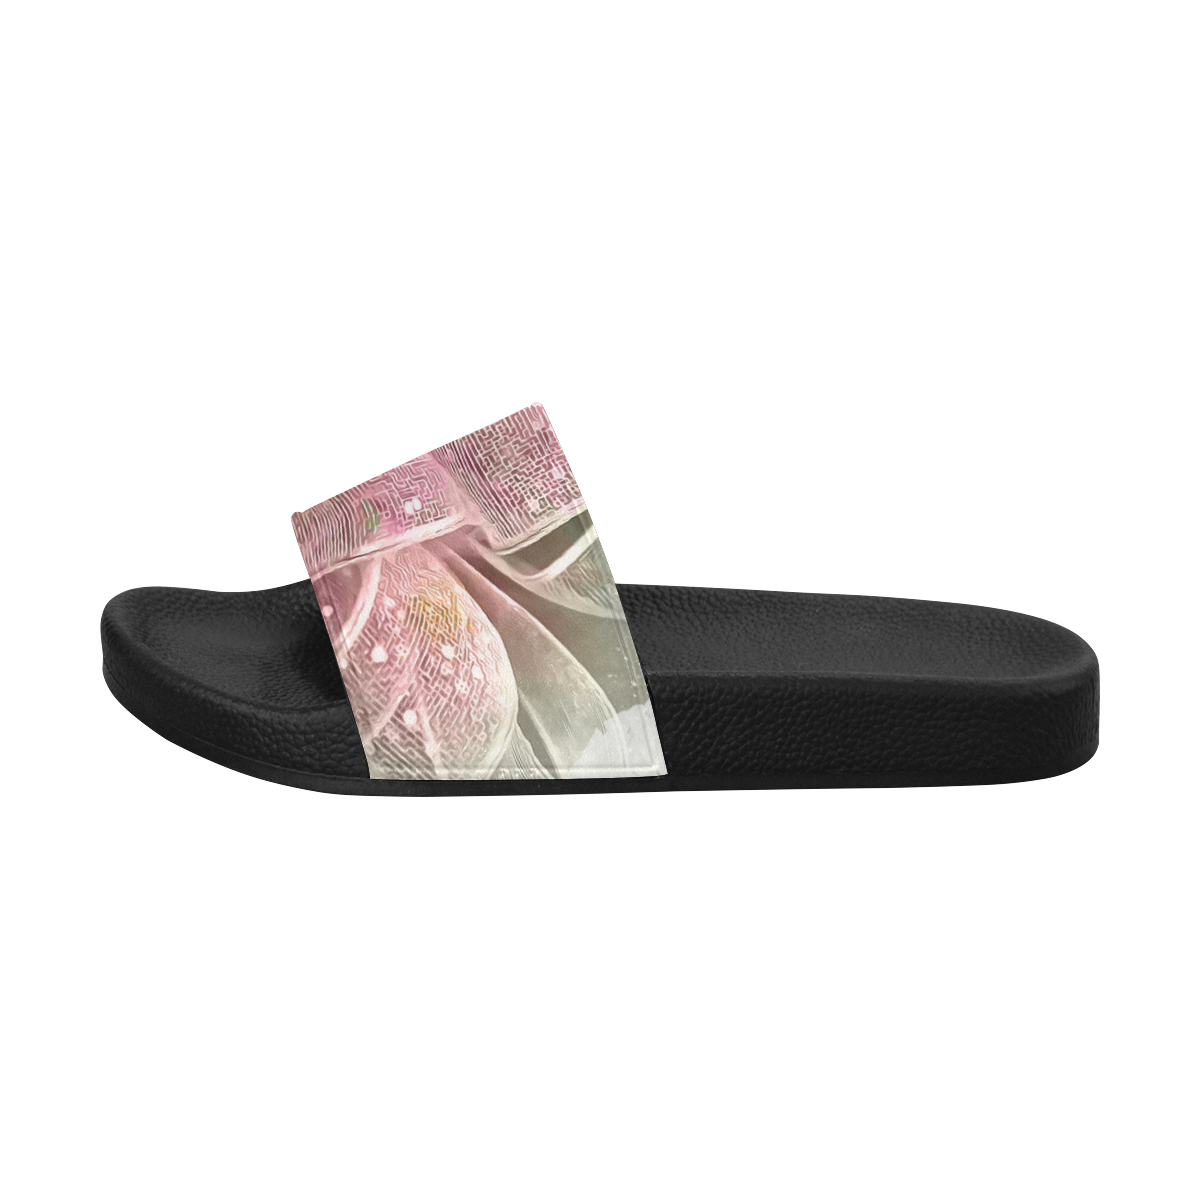 Beautiful soft roses Women's Slide Sandals (Model 057)